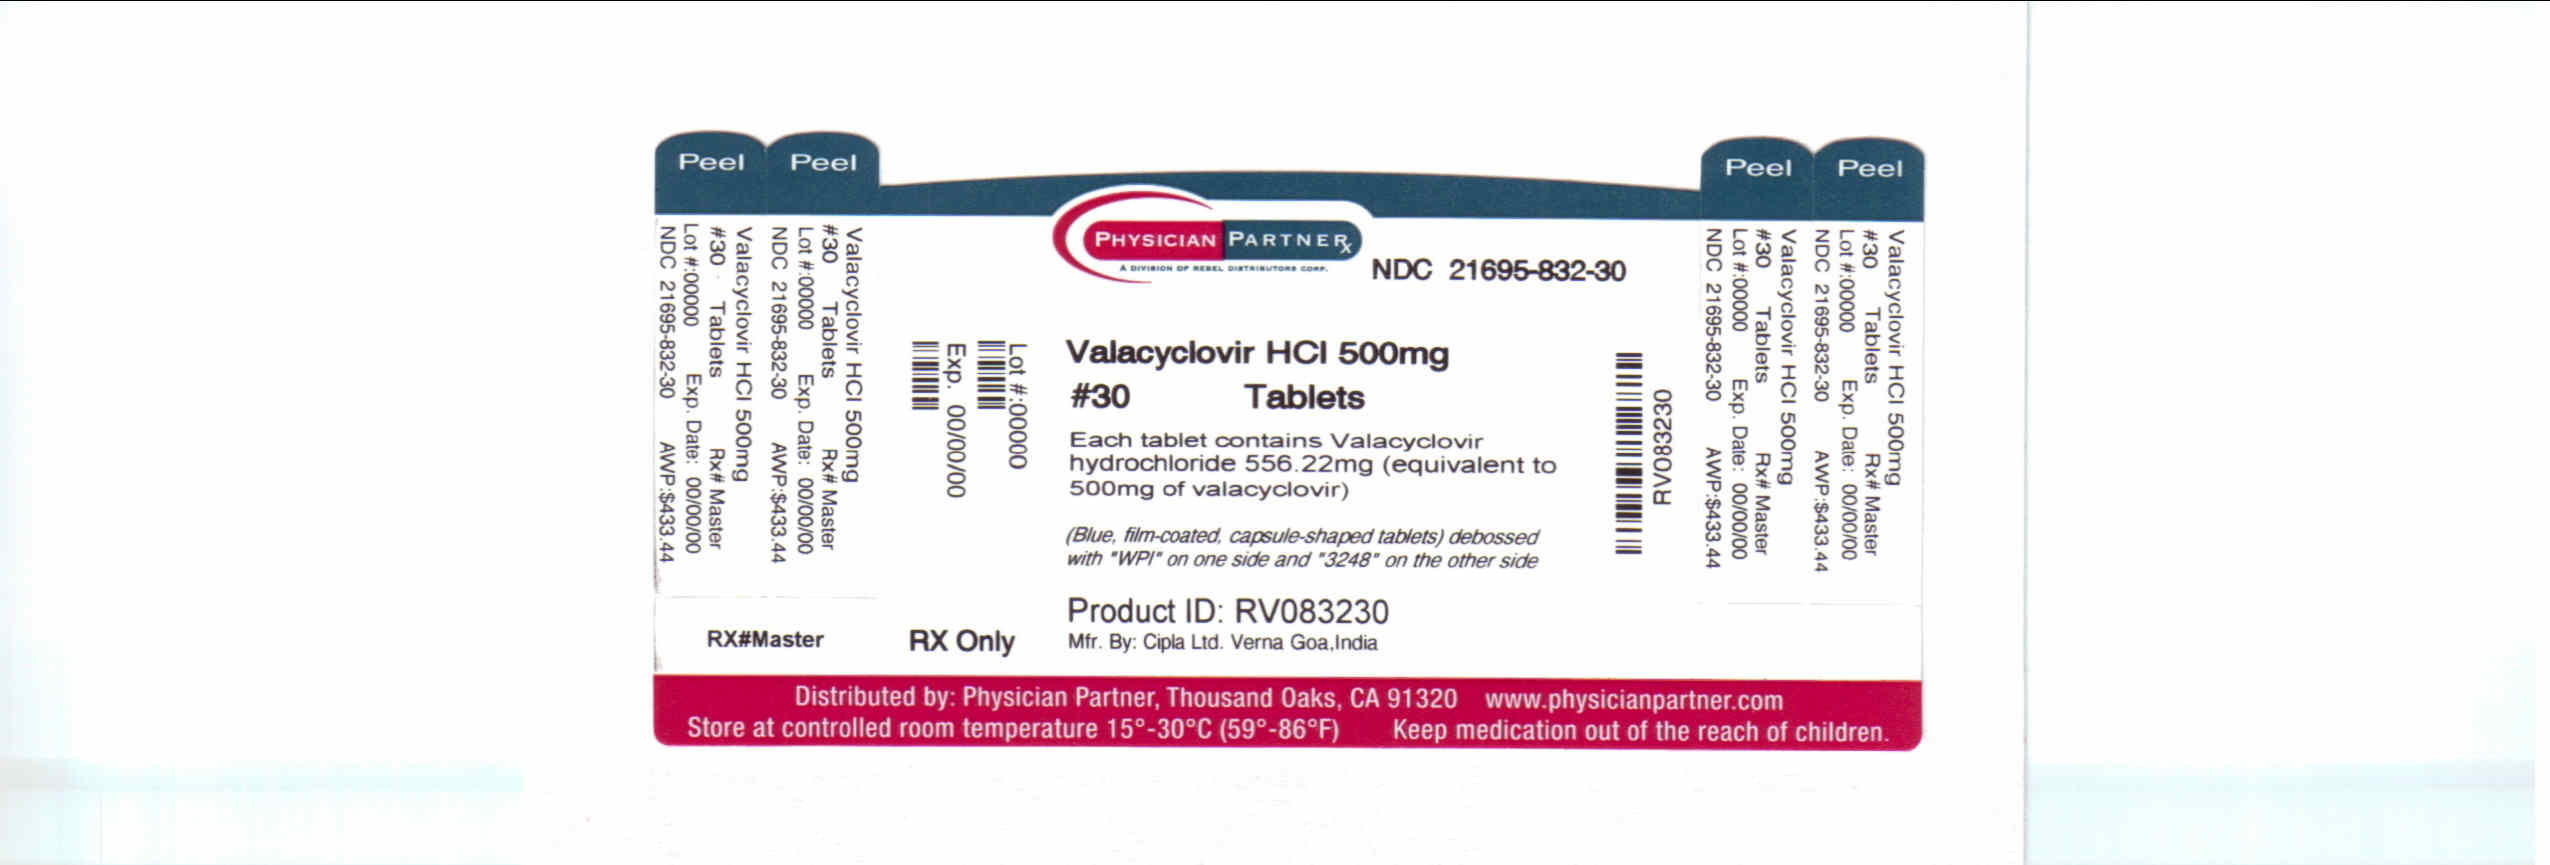 Valacyclovir HCl 500mg